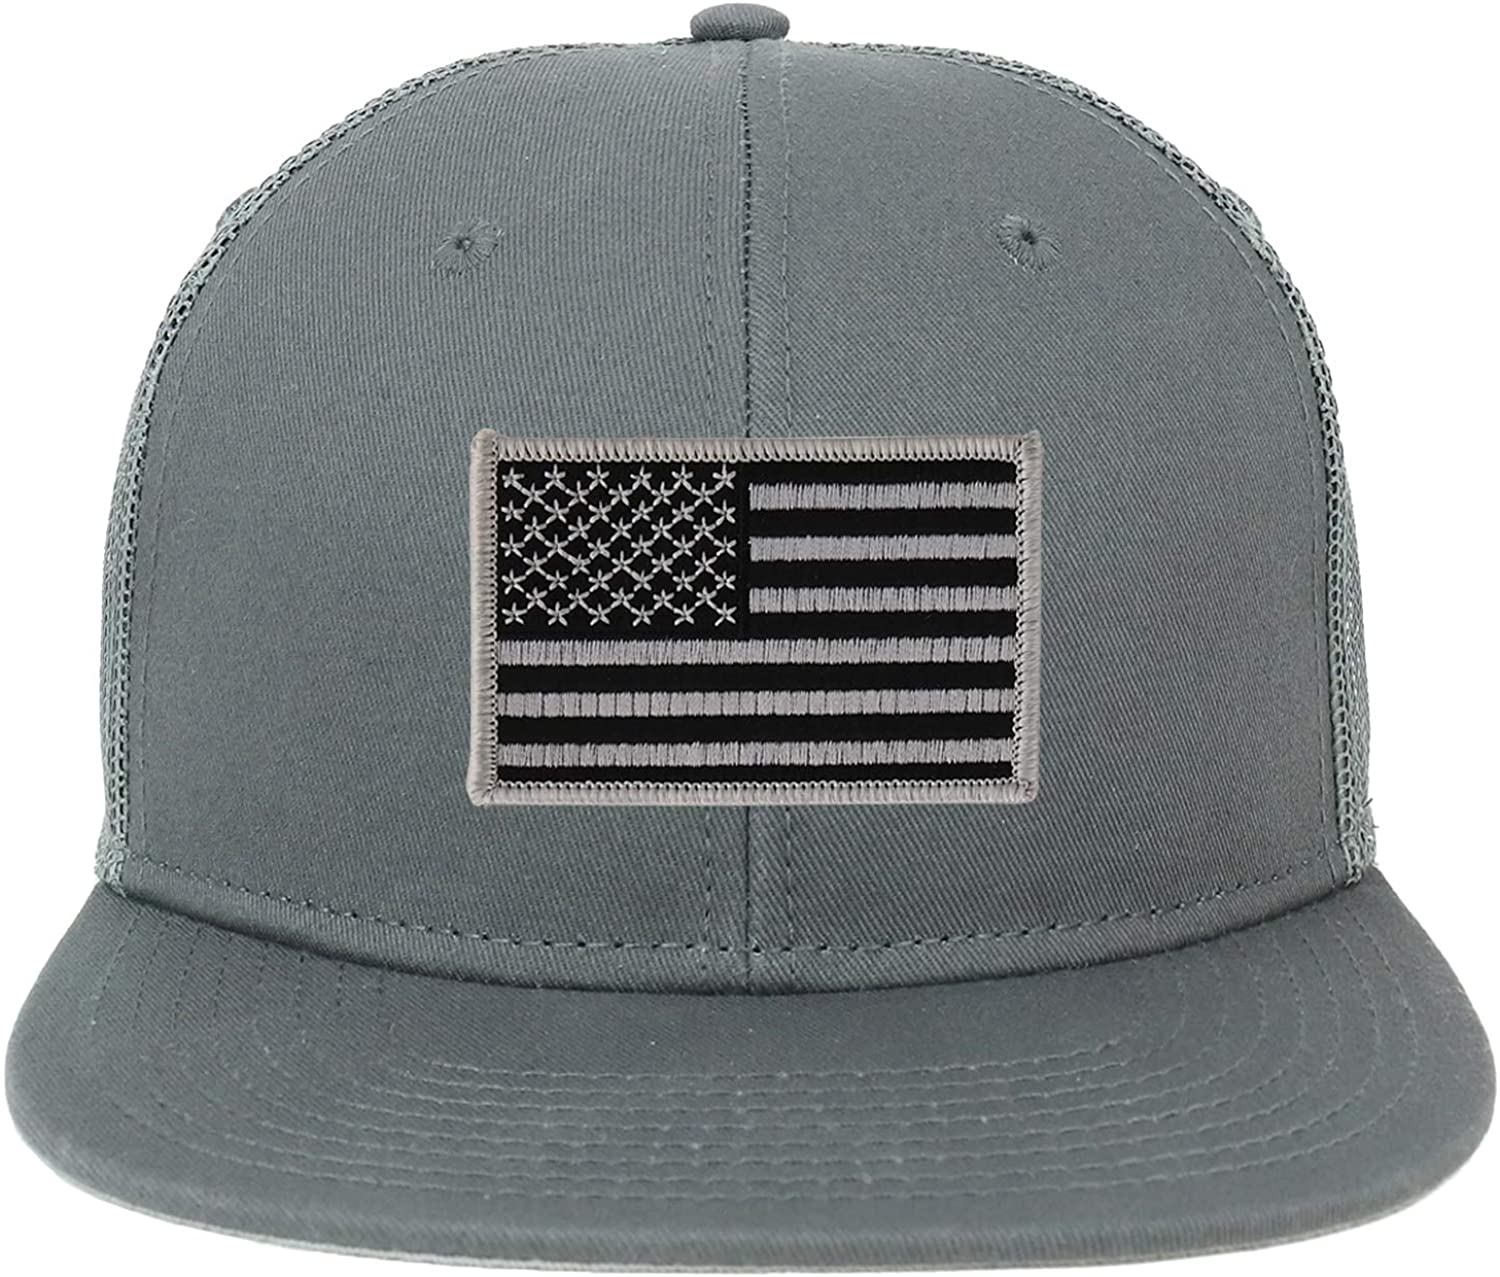 Armycrew Oversize XXL Black Grey USA Flag Patch Flatbill Mesh Snapback Cap - Black - 2XL